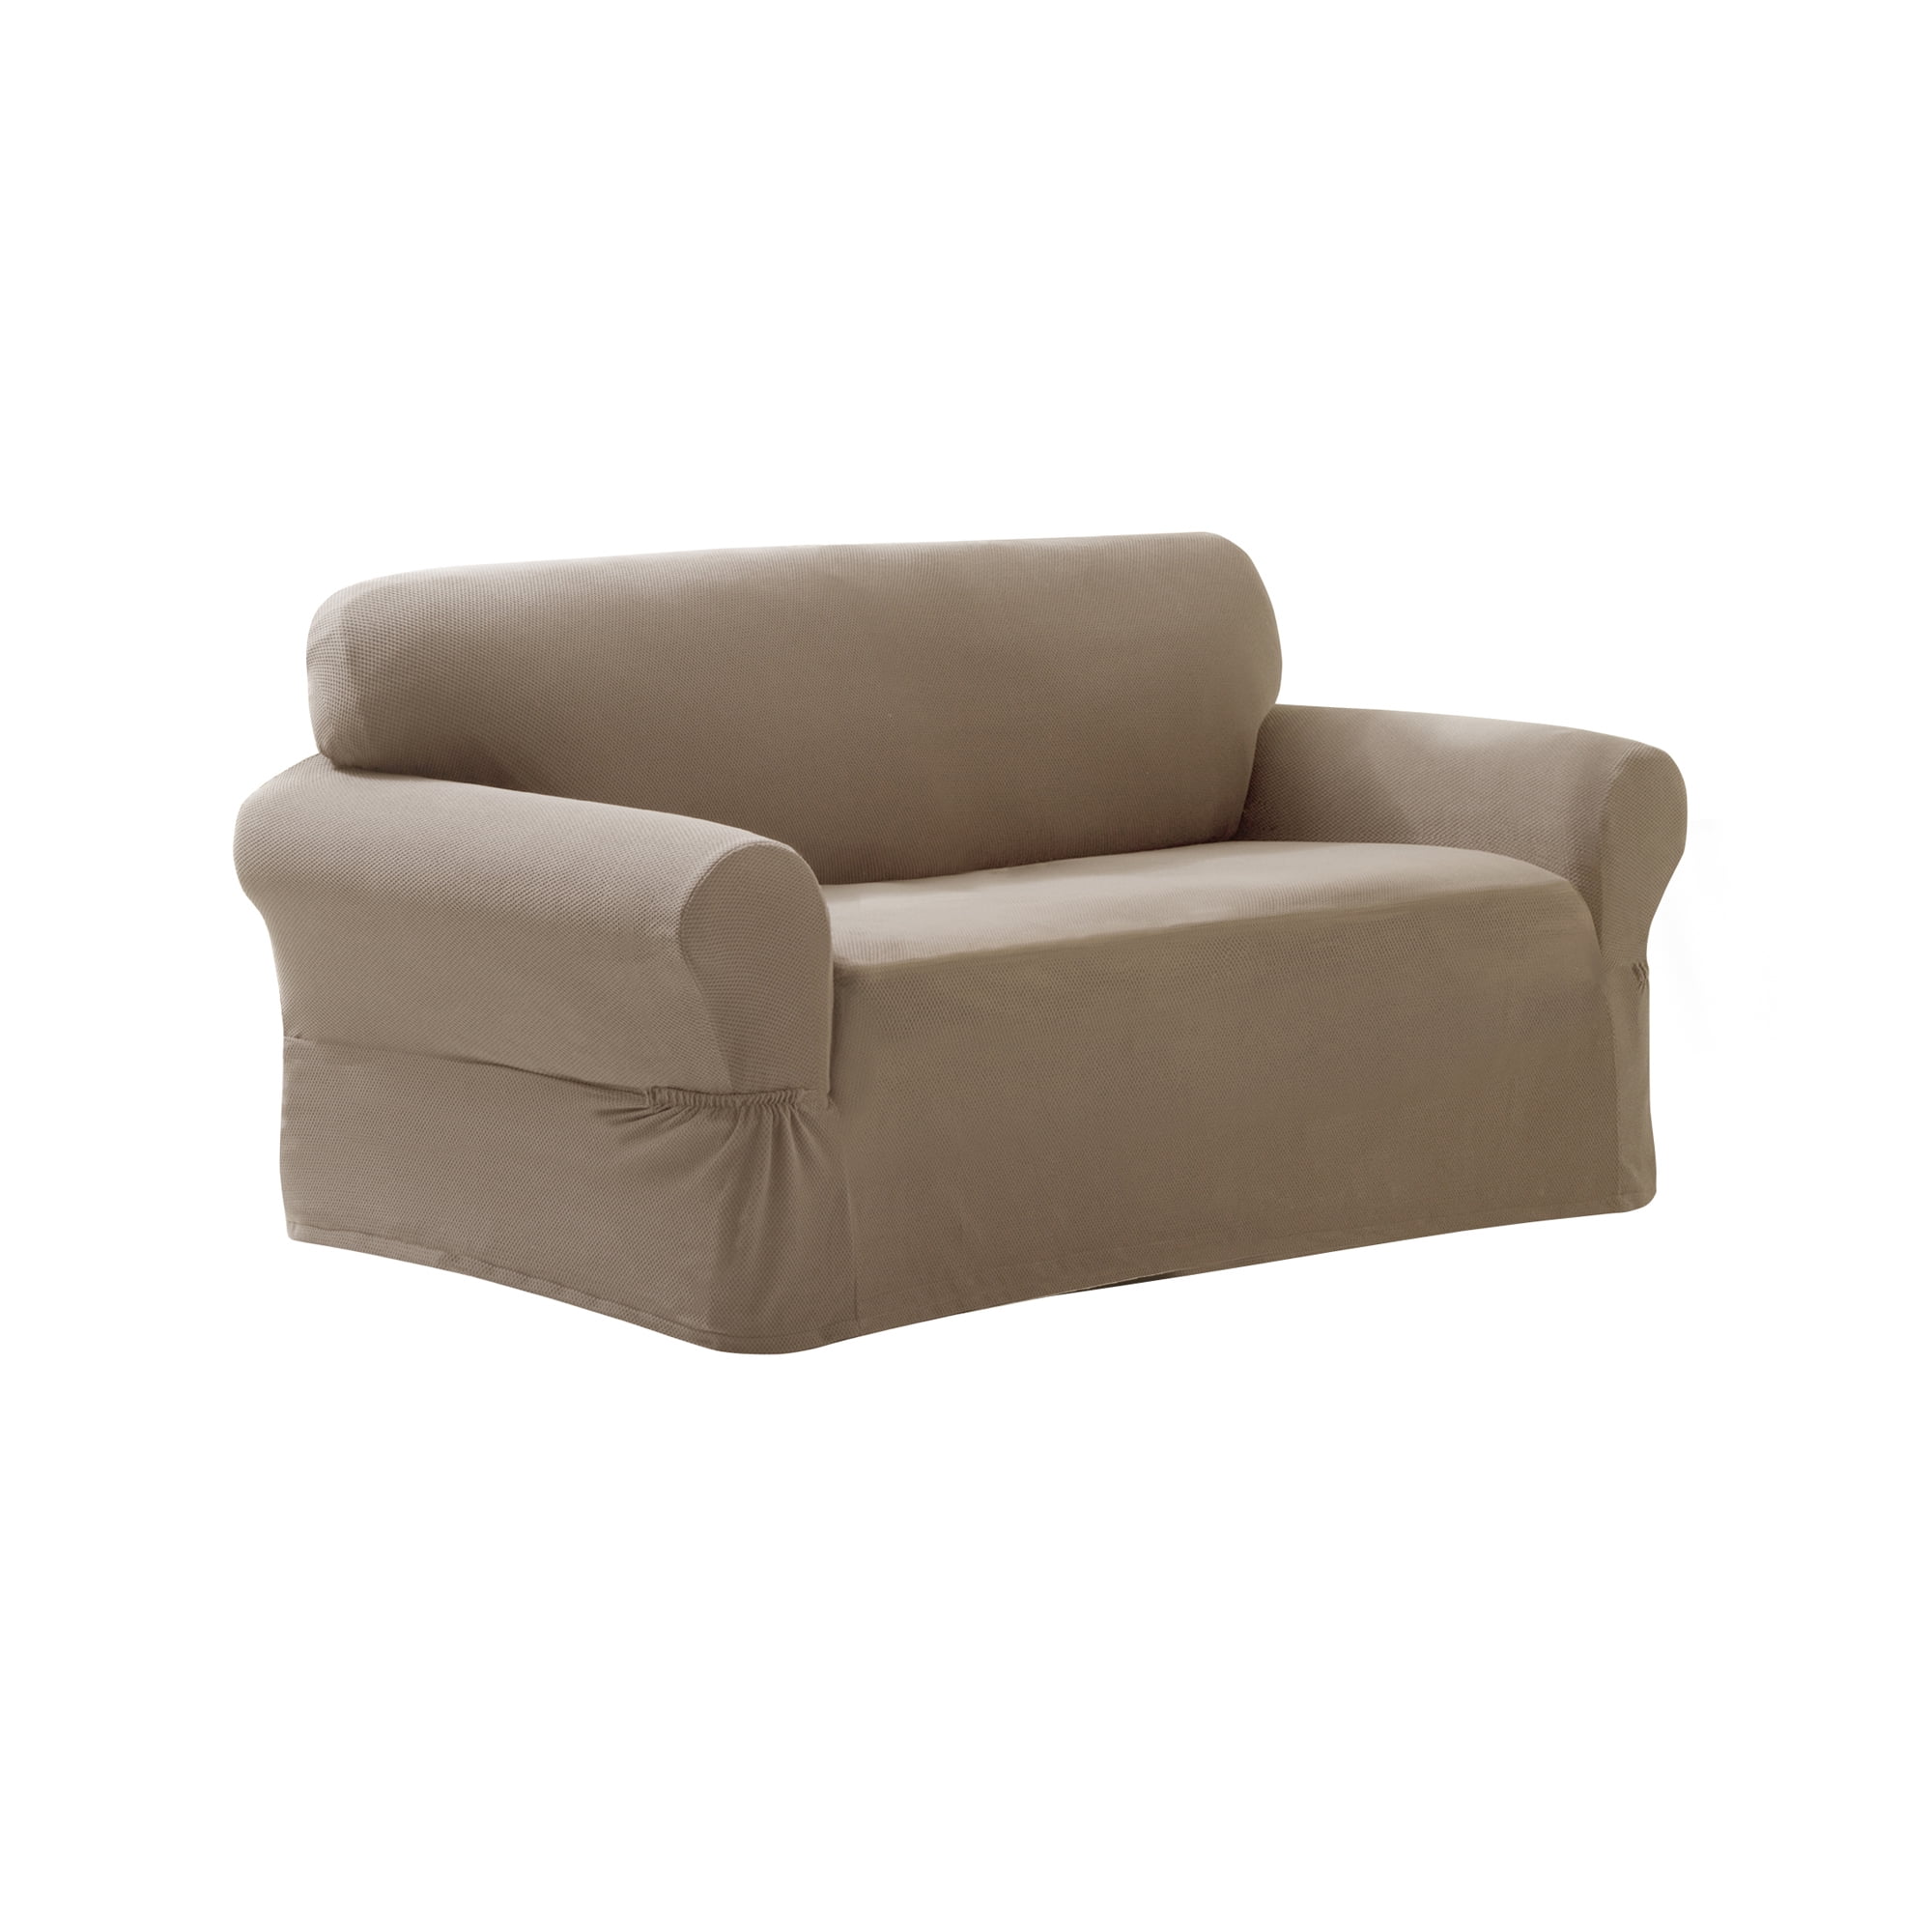 NEW Sure Fit Stretch Jacquard Damask T cushion Sofa Slip cover tan mushroom 